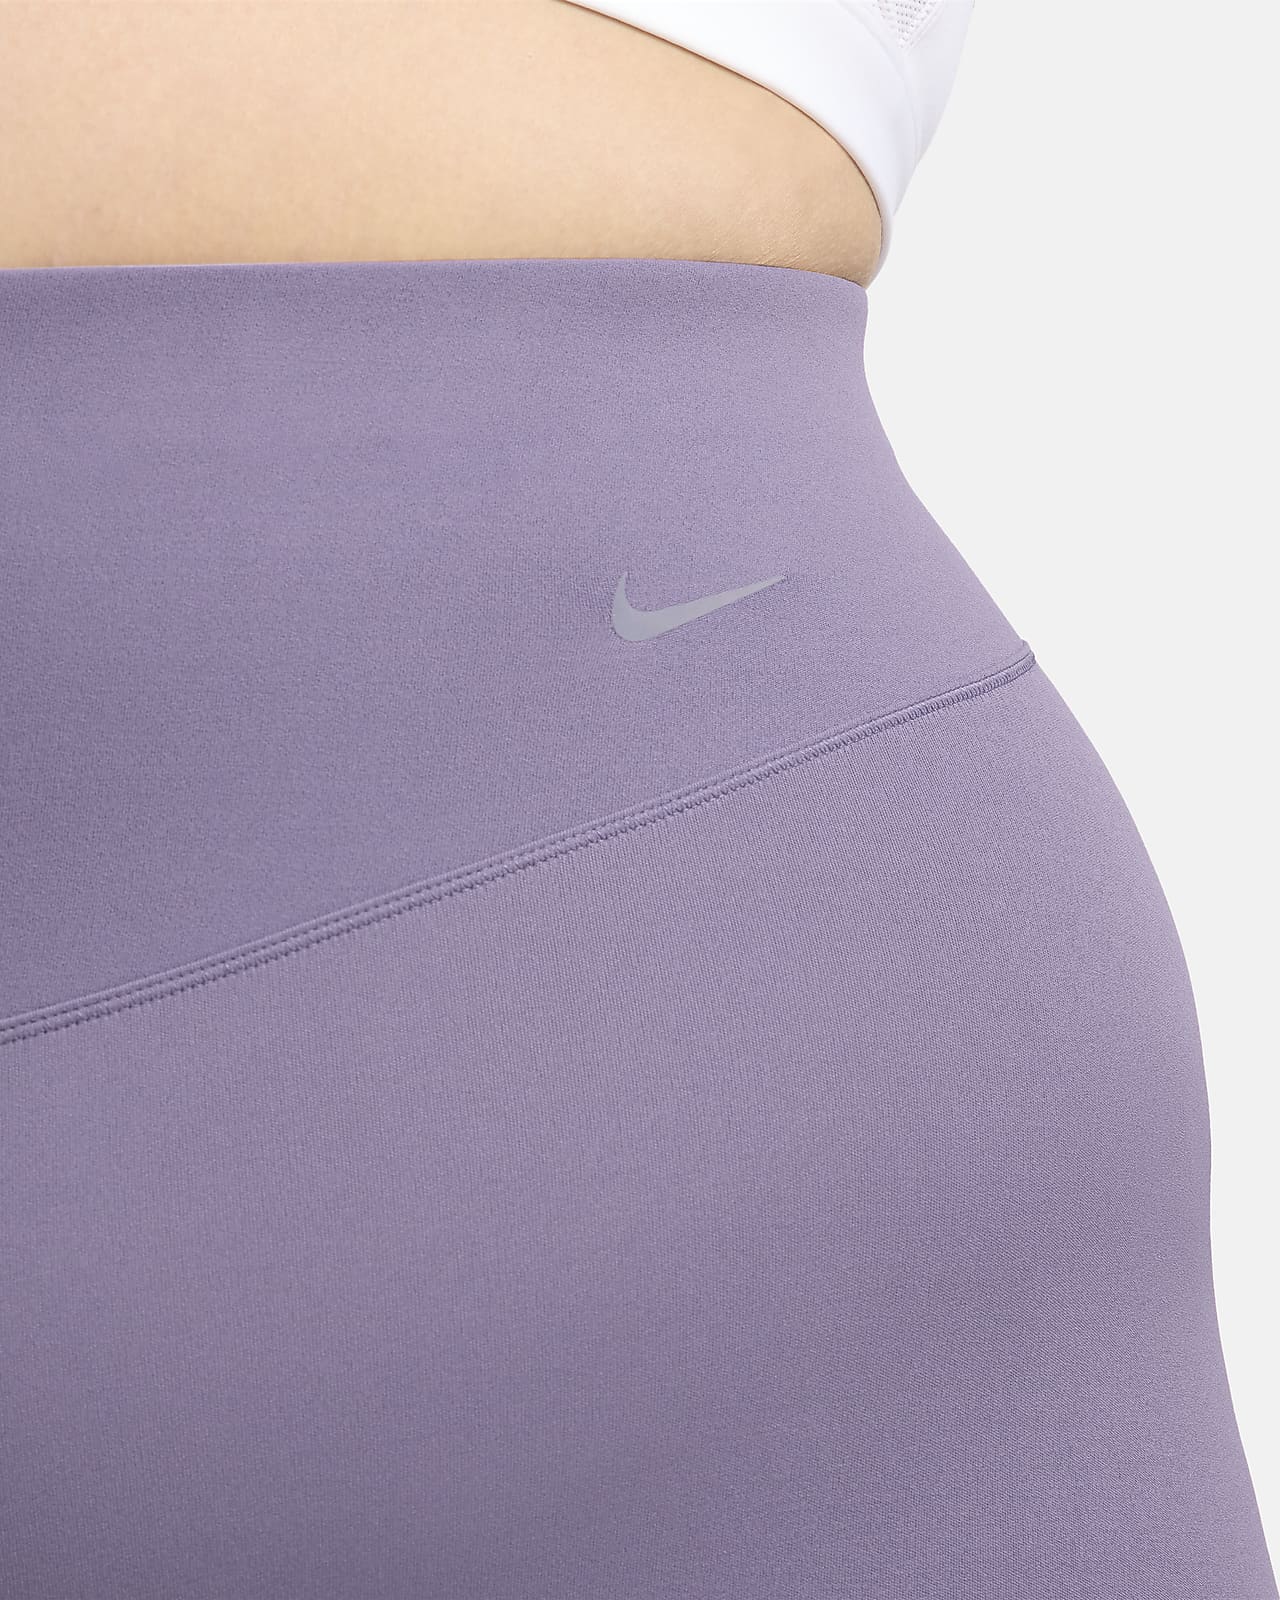 Nike Training One Dri-FIT maternity leggings in purple